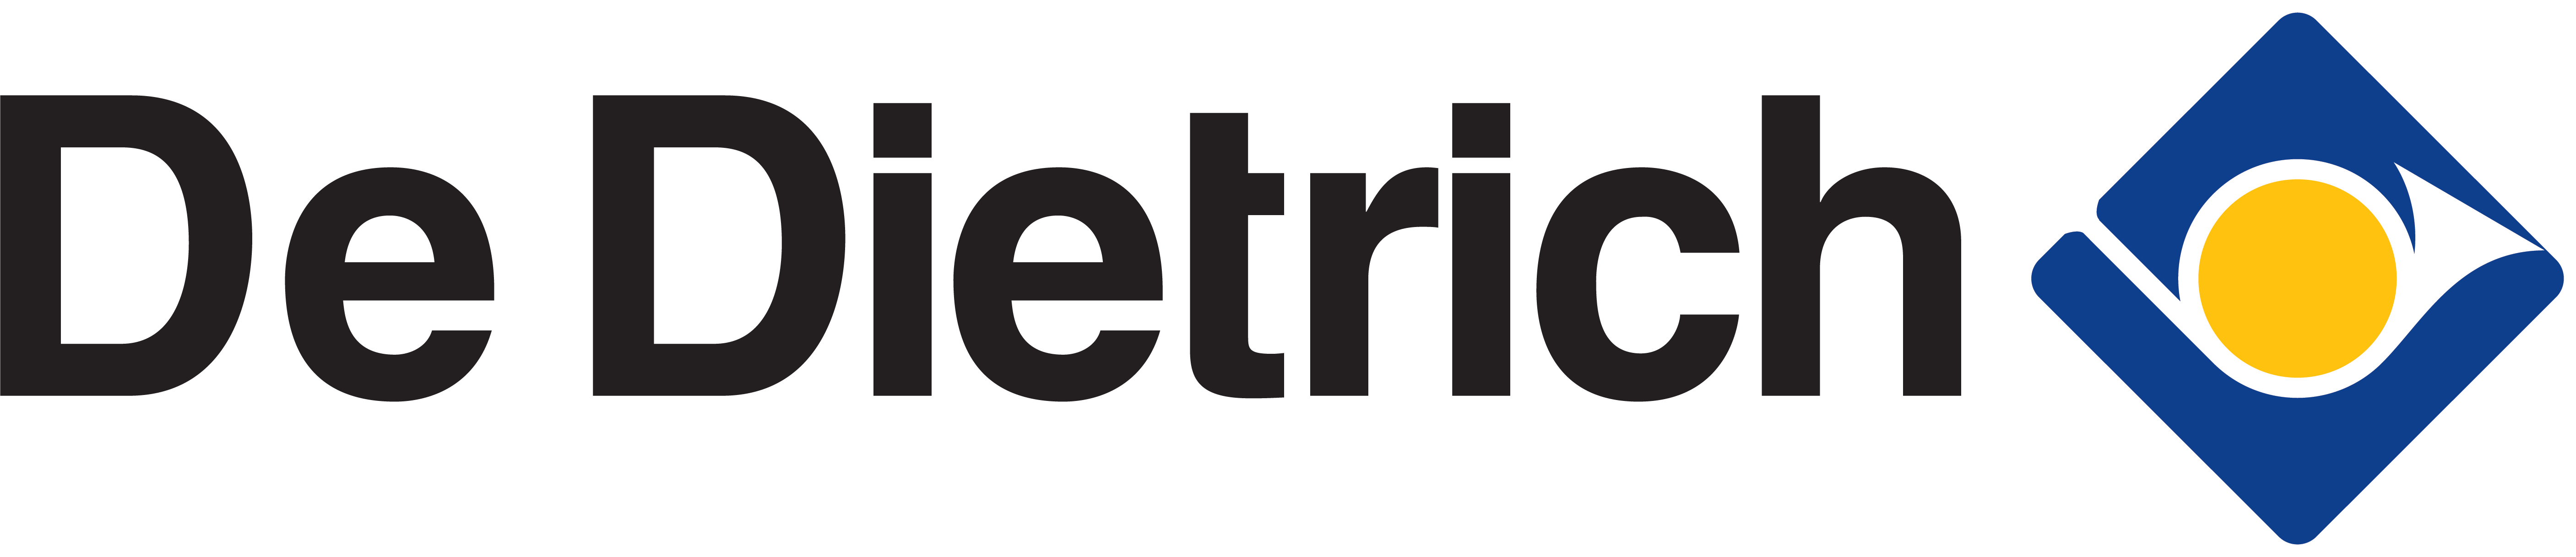 DeDietrich logo